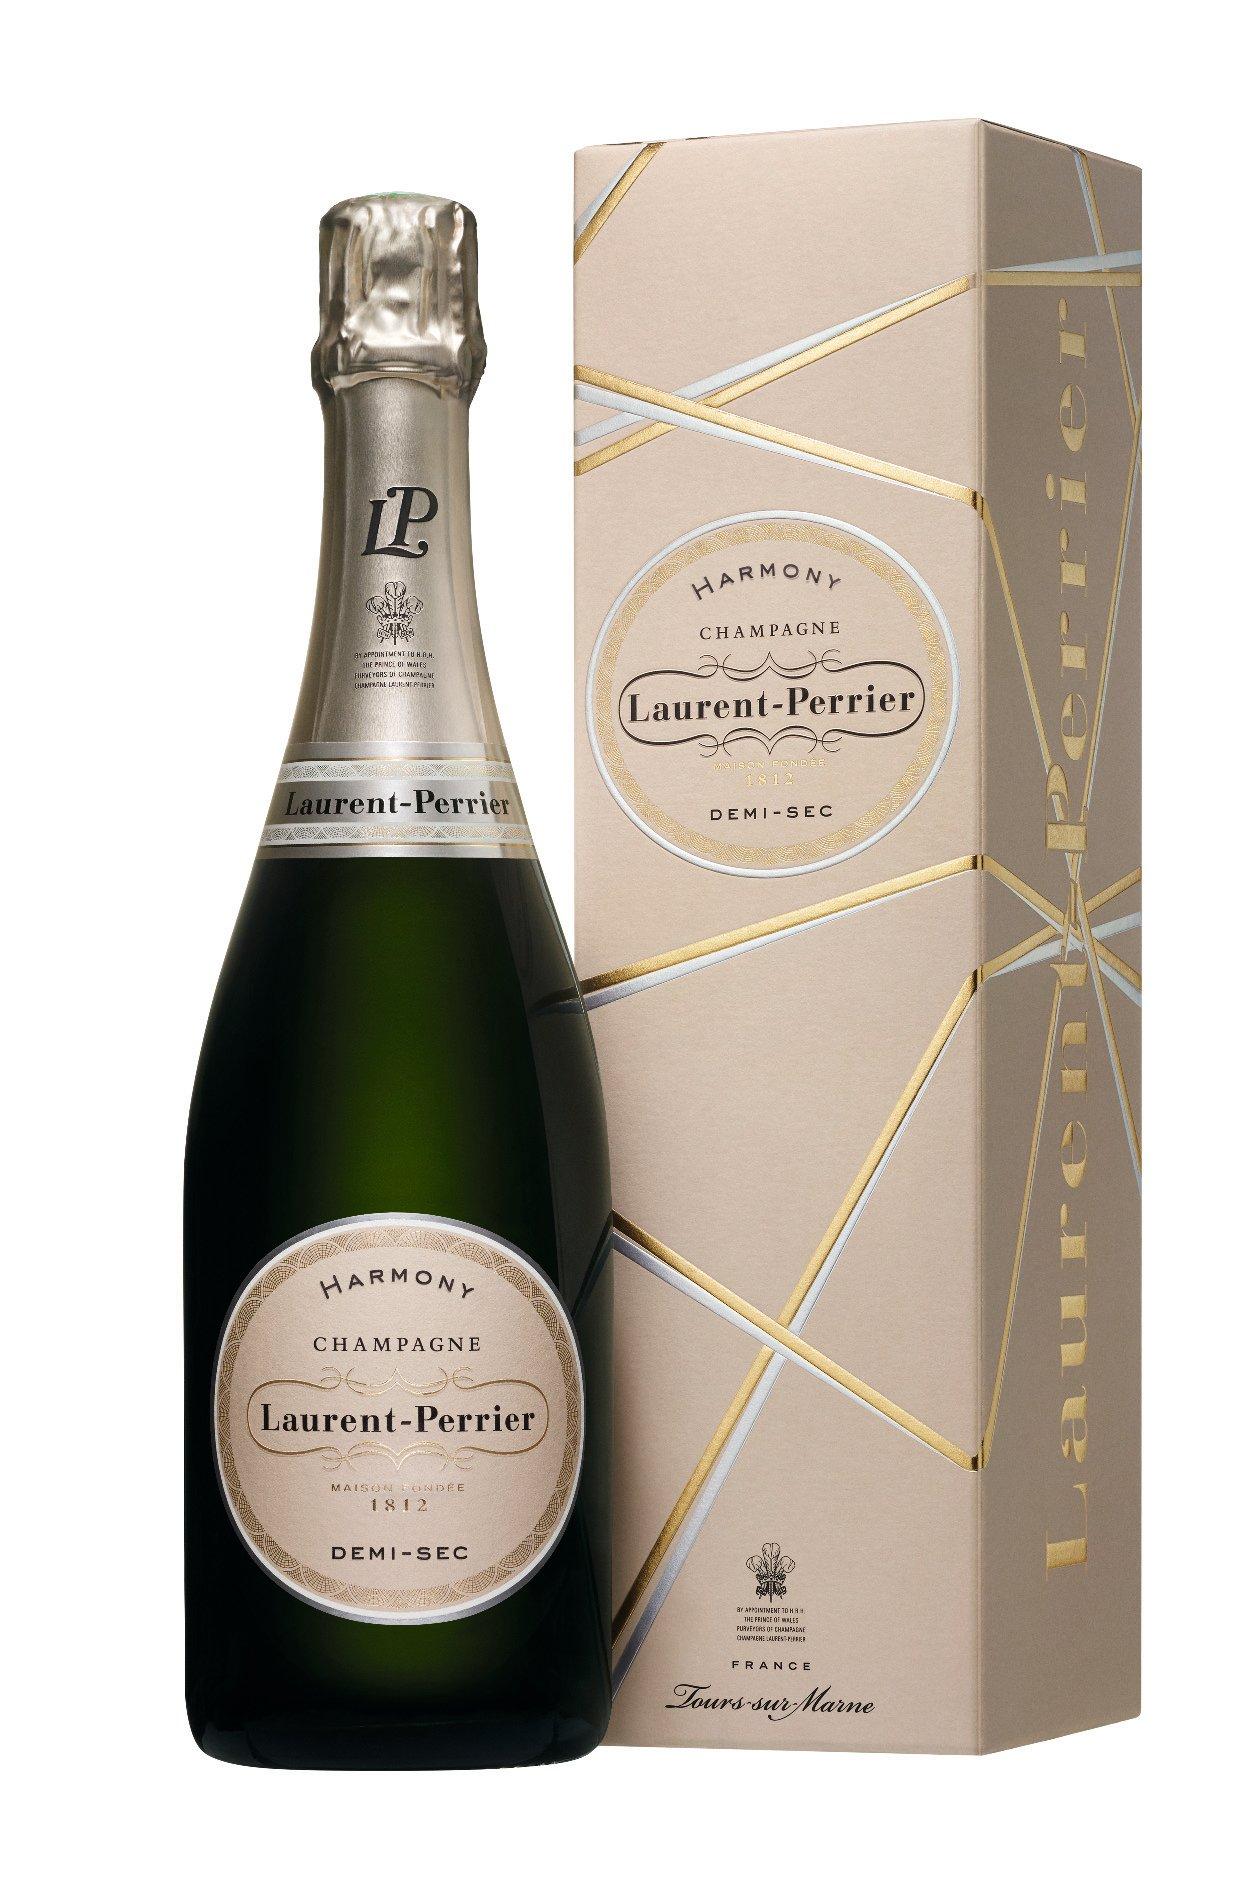 Champagne Laurent-Perrier Harmony demi-sec, Champagne AOC  